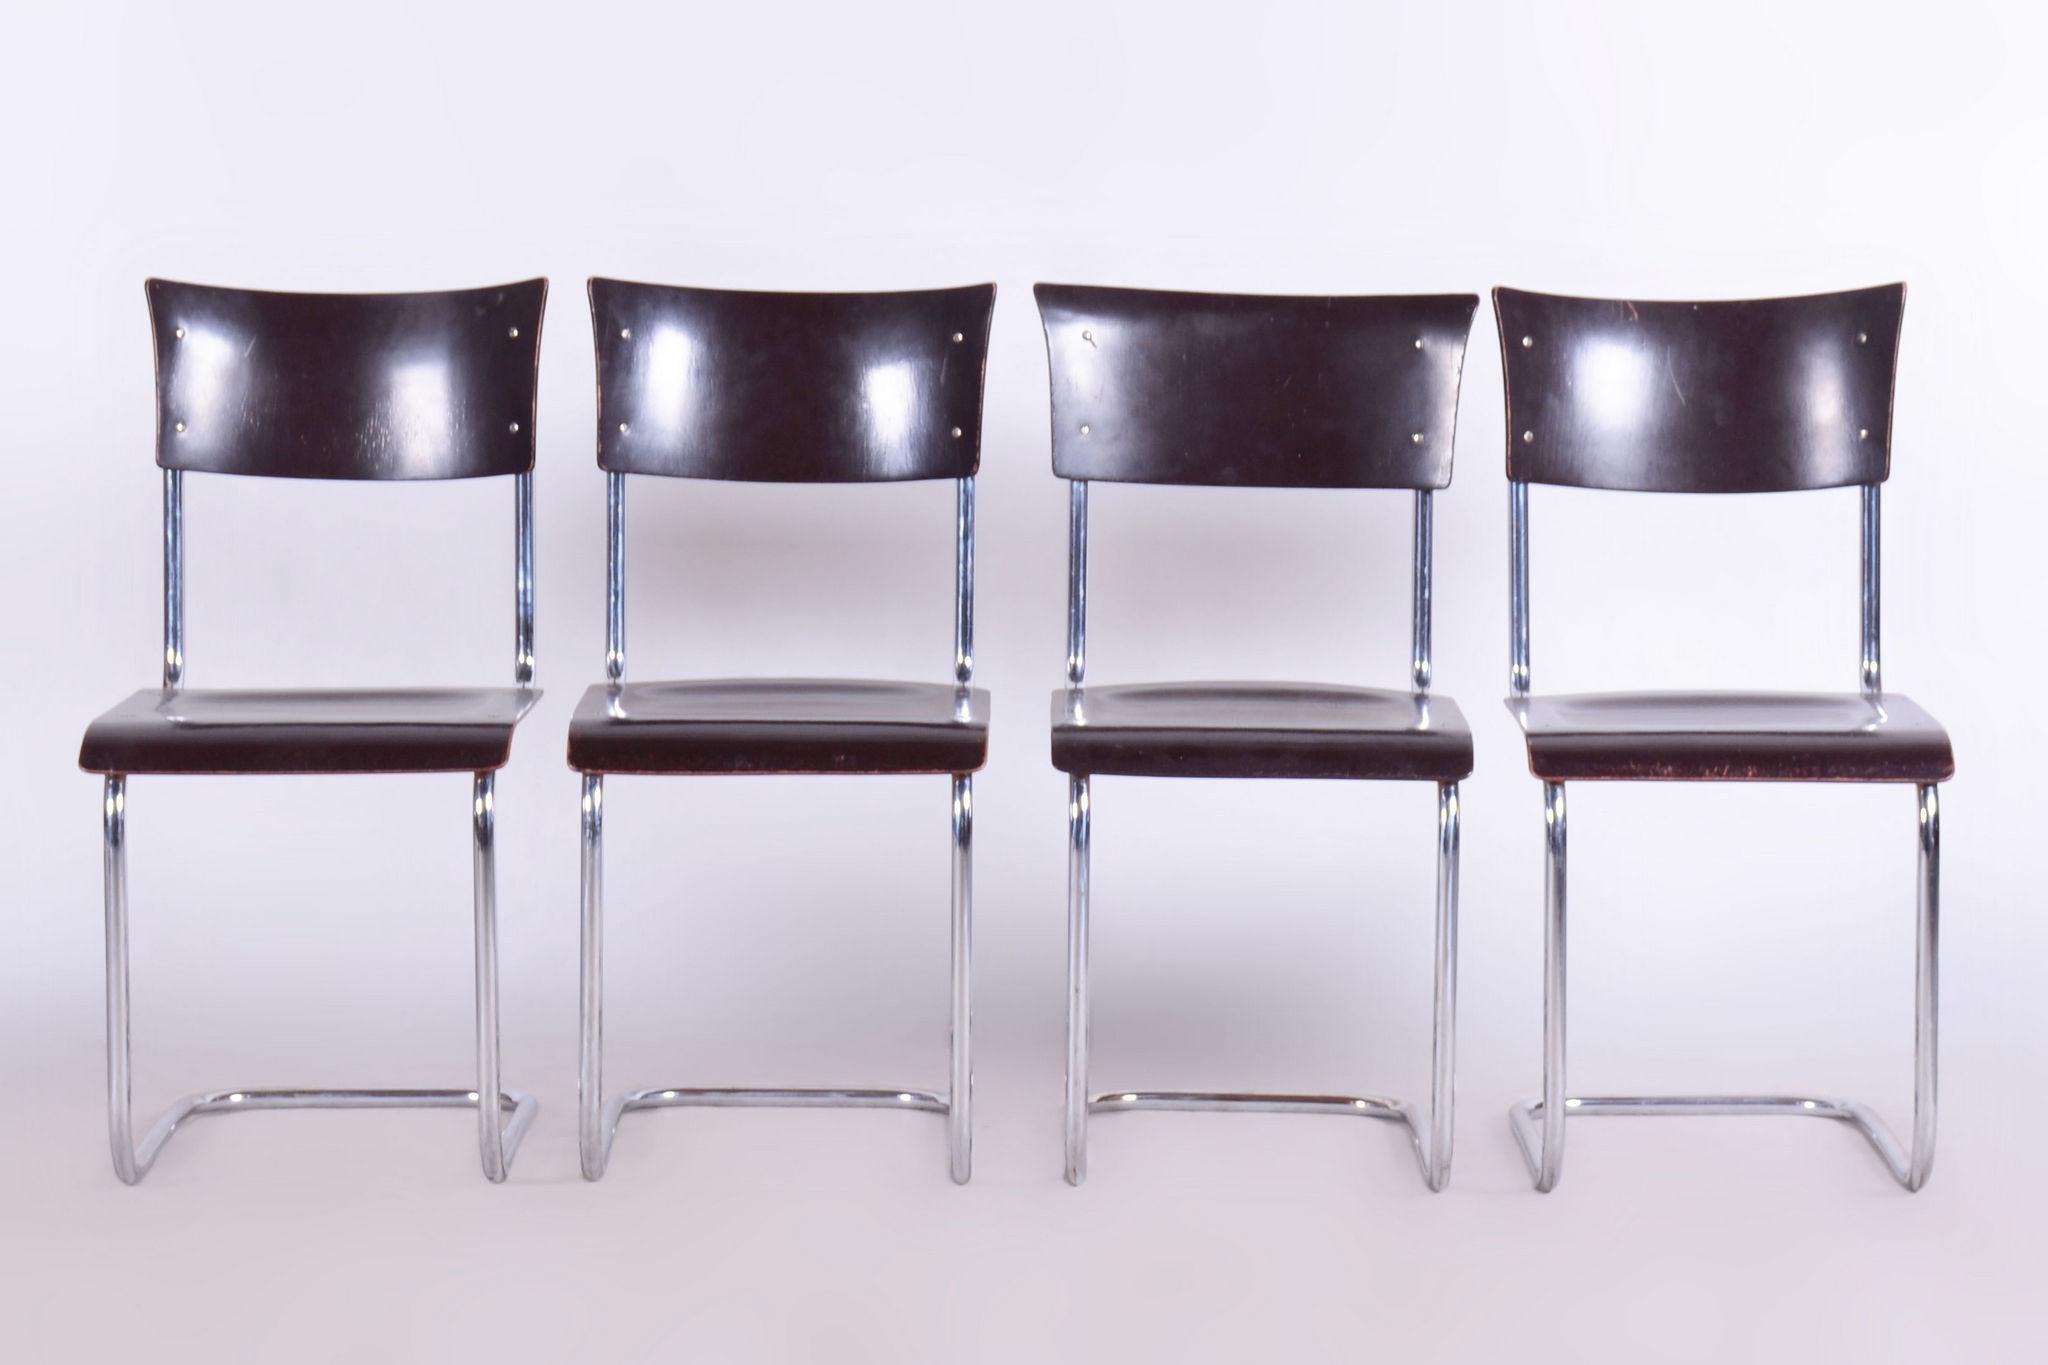 Set of 4 Restored Bauhaus Chairs, Mart Stam, Robert Slezak, Czechia, 1930s For Sale 5